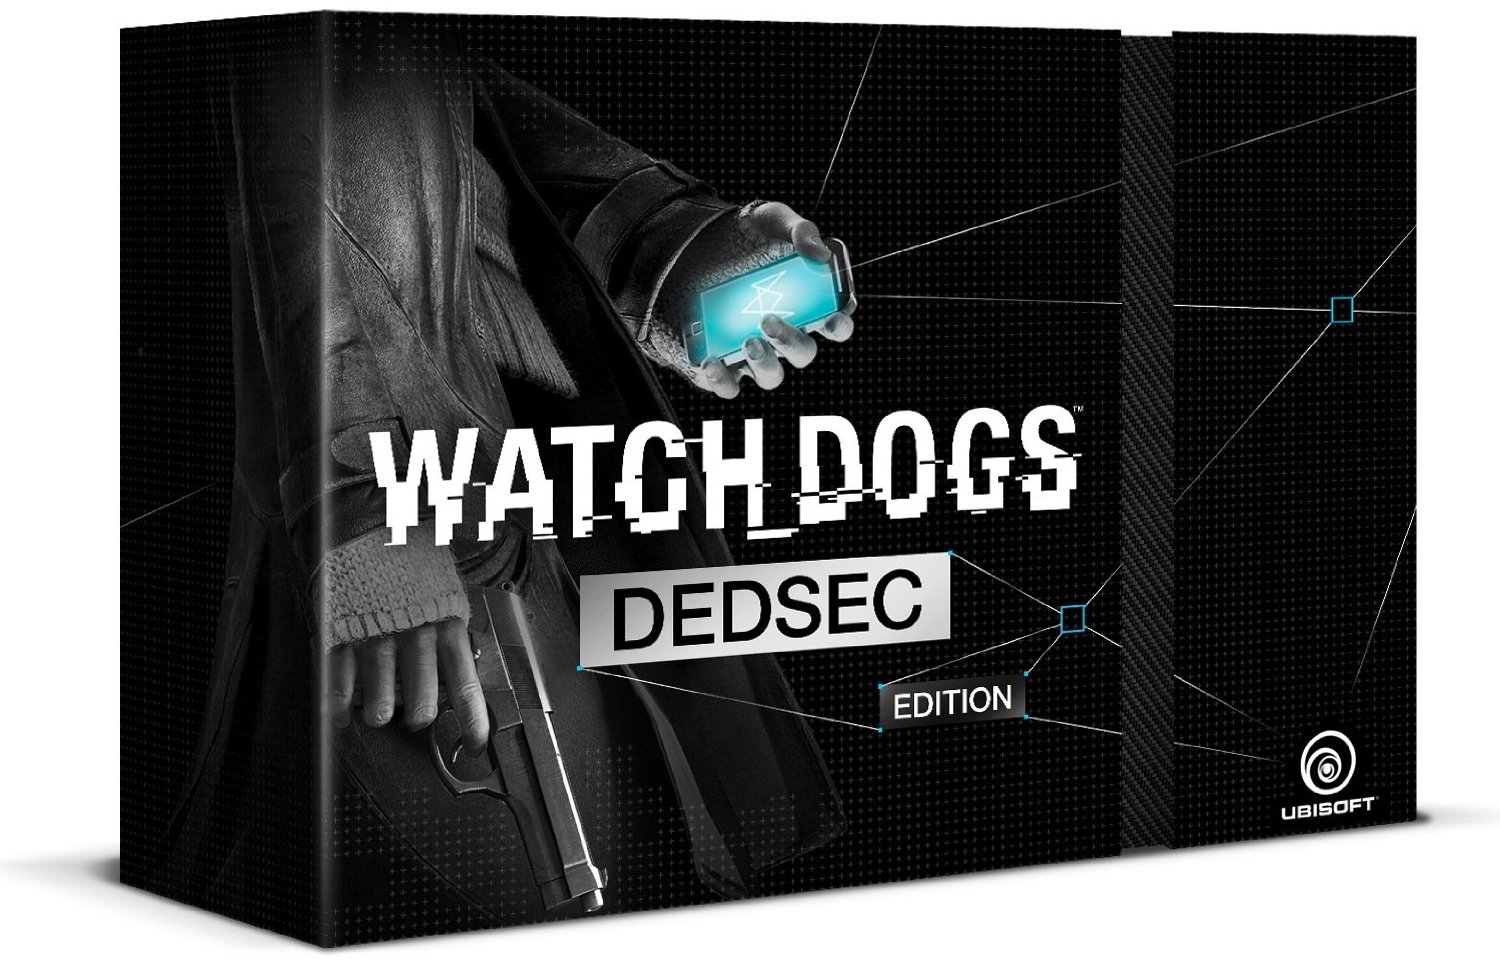 [PRE-COMMANDE] Watch Dogs – Edition Dedsec sur PS3